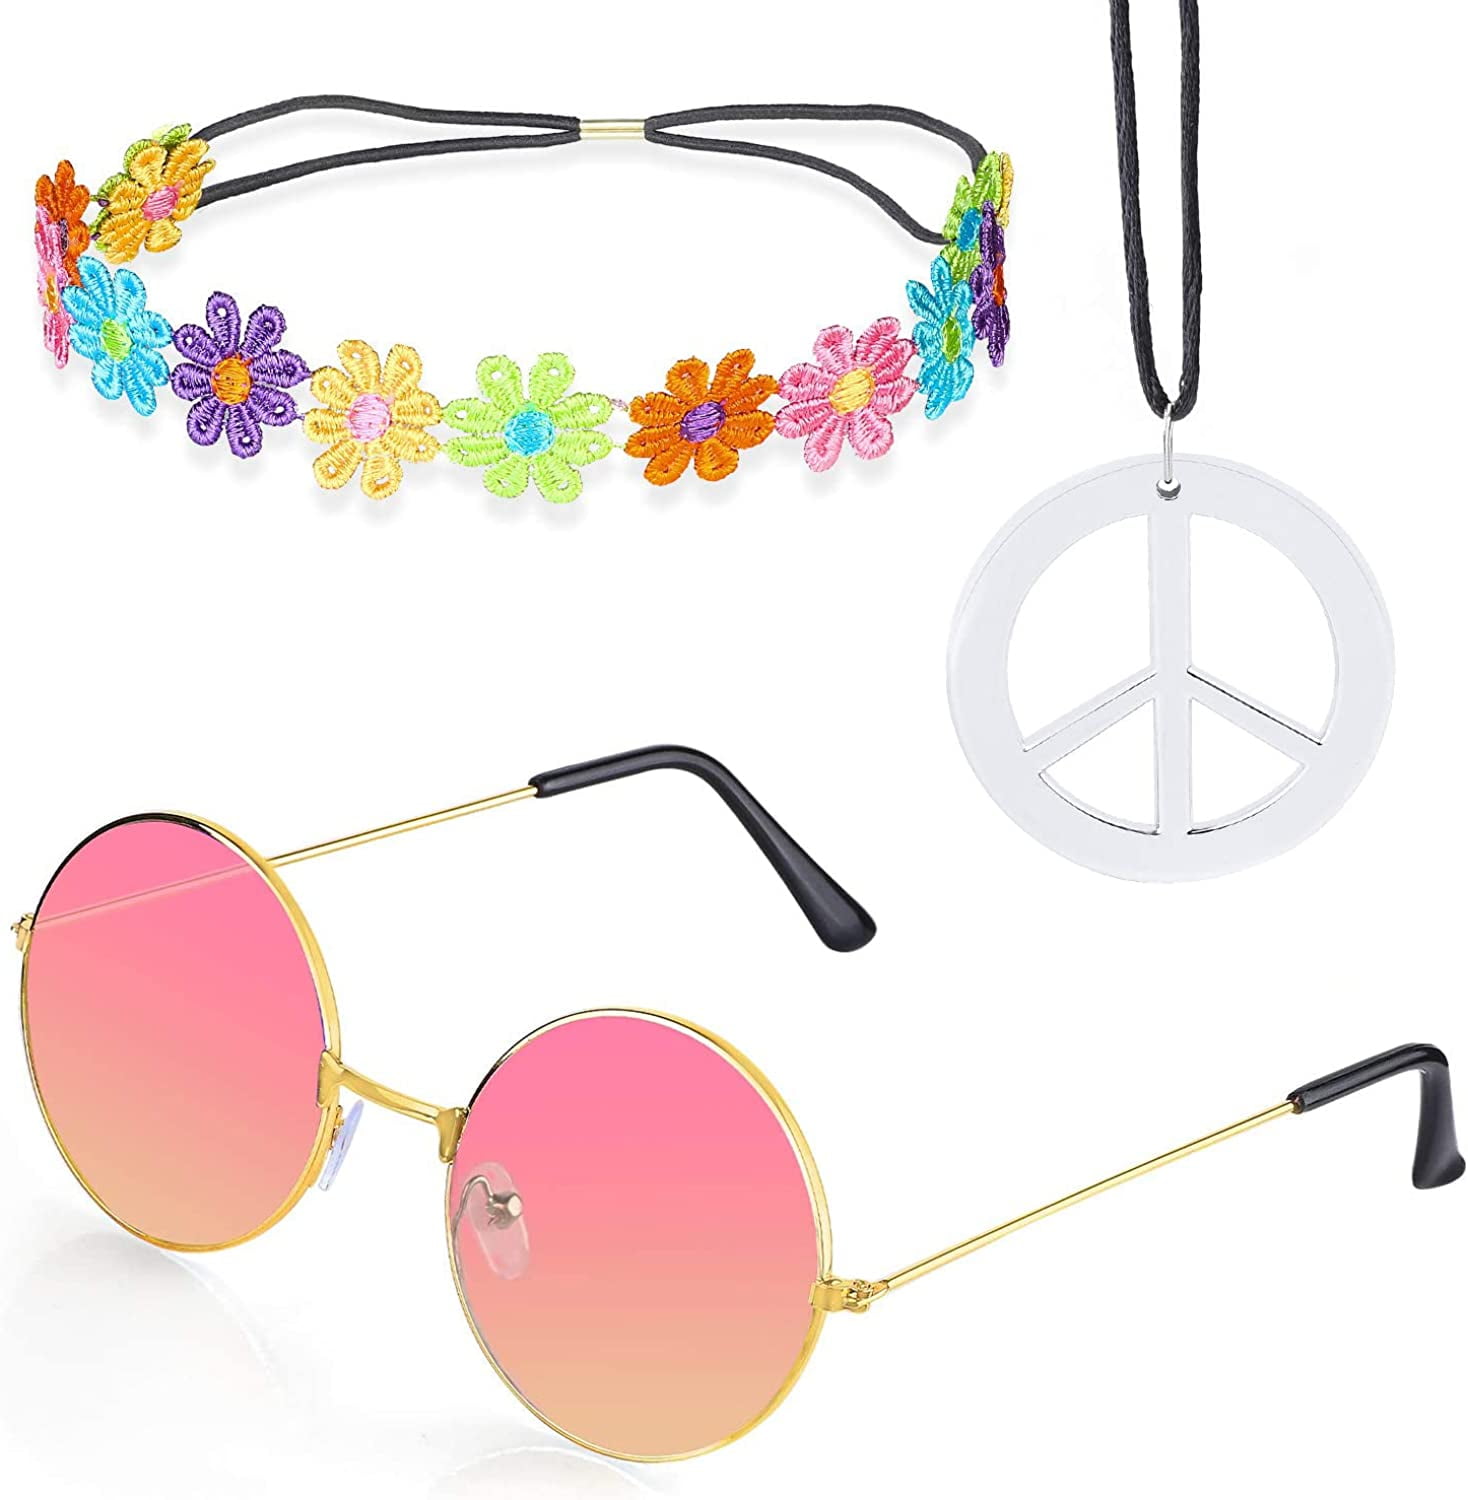 Hippy Fancy Dress Set Round 1960's Glasses 8 Designs Fun Peace necklace Hippie 